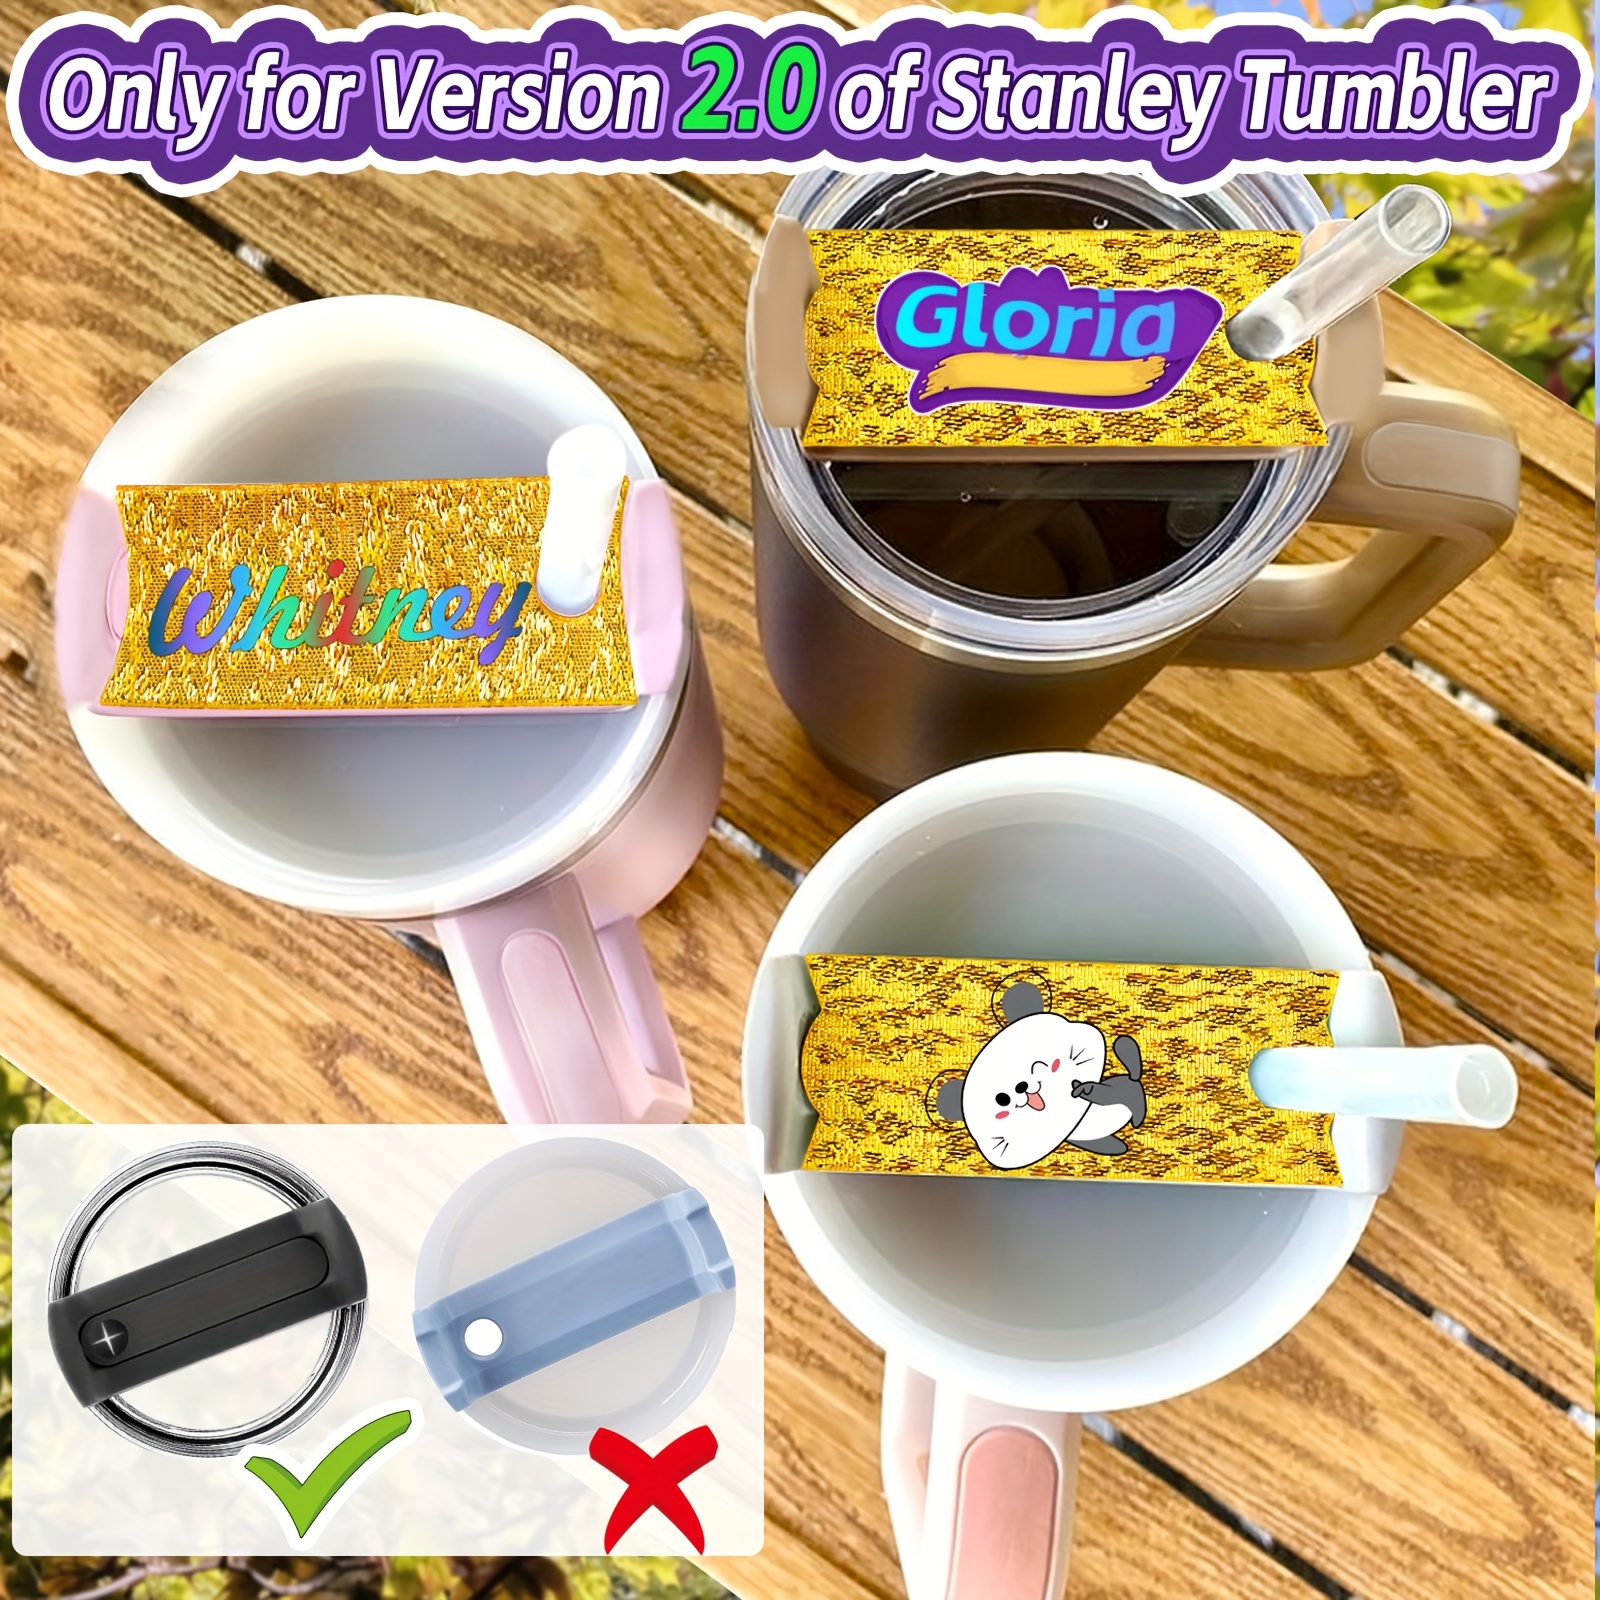 Custom Stanley Tumbler Nameplates